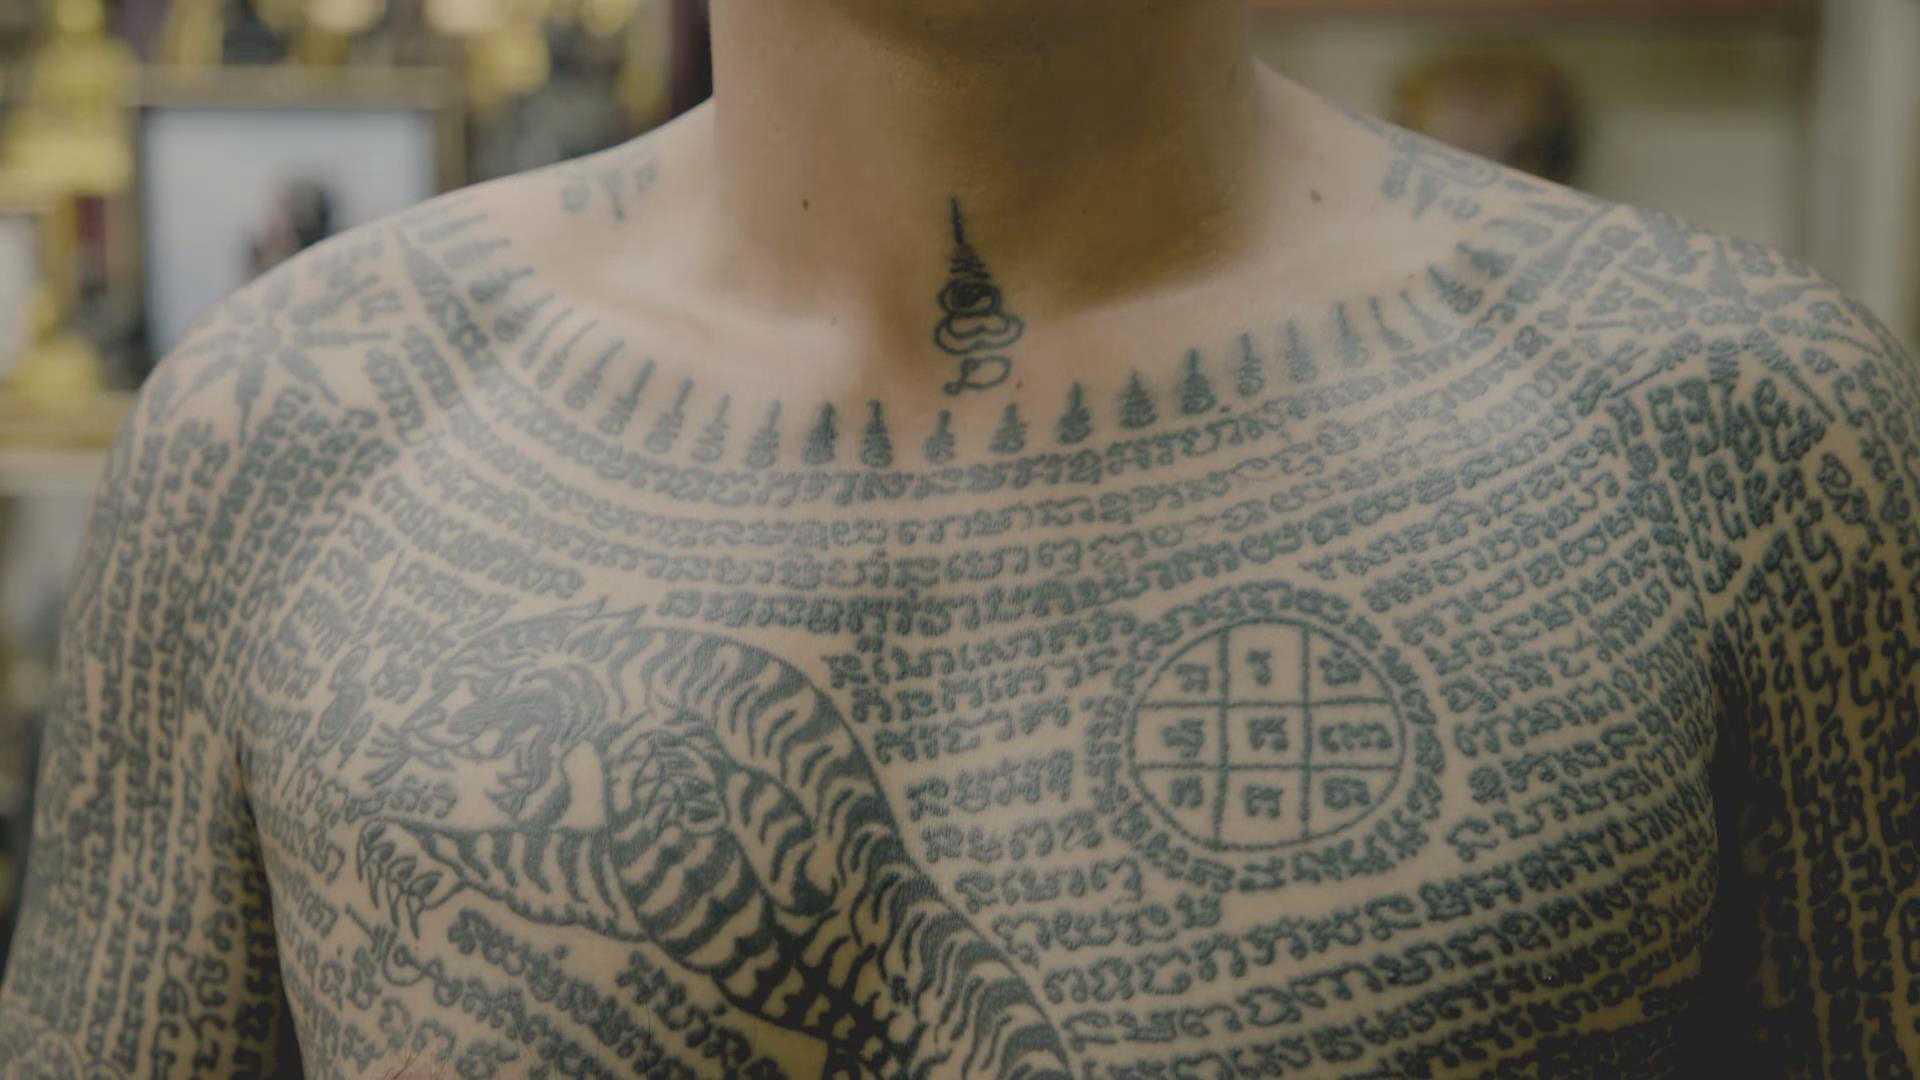 Meet Thailand's tattoo master